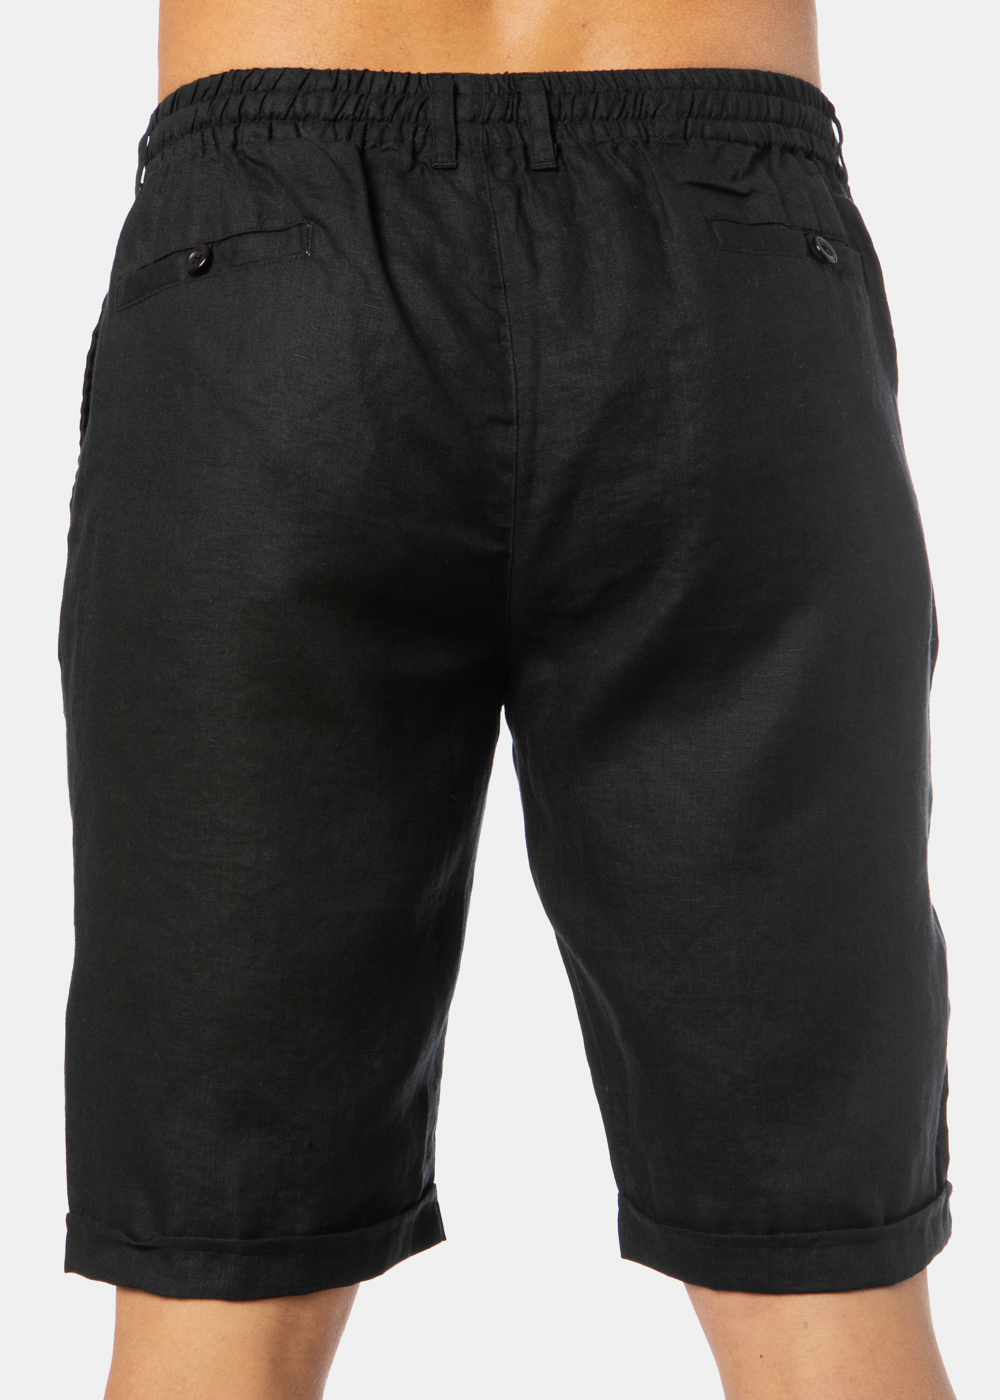 100% Linen Black Classic Shorts